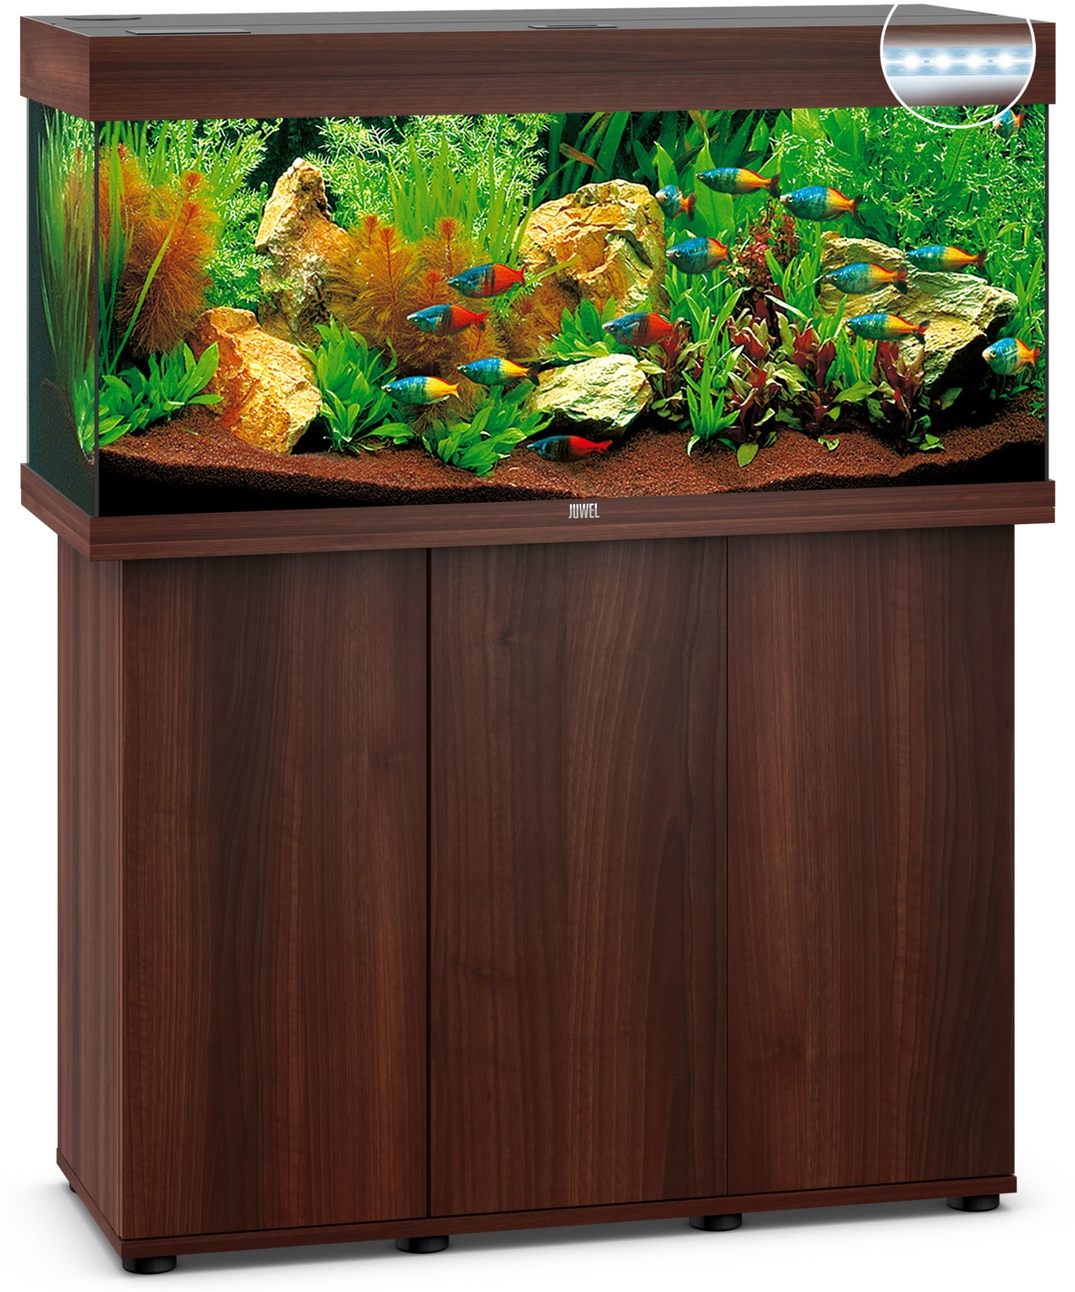 Juwel JUWEL Rio 180 LED Aquarium mit Unterschrank SBX, 101 x 41 x (50+73) cm, dunkles Holz